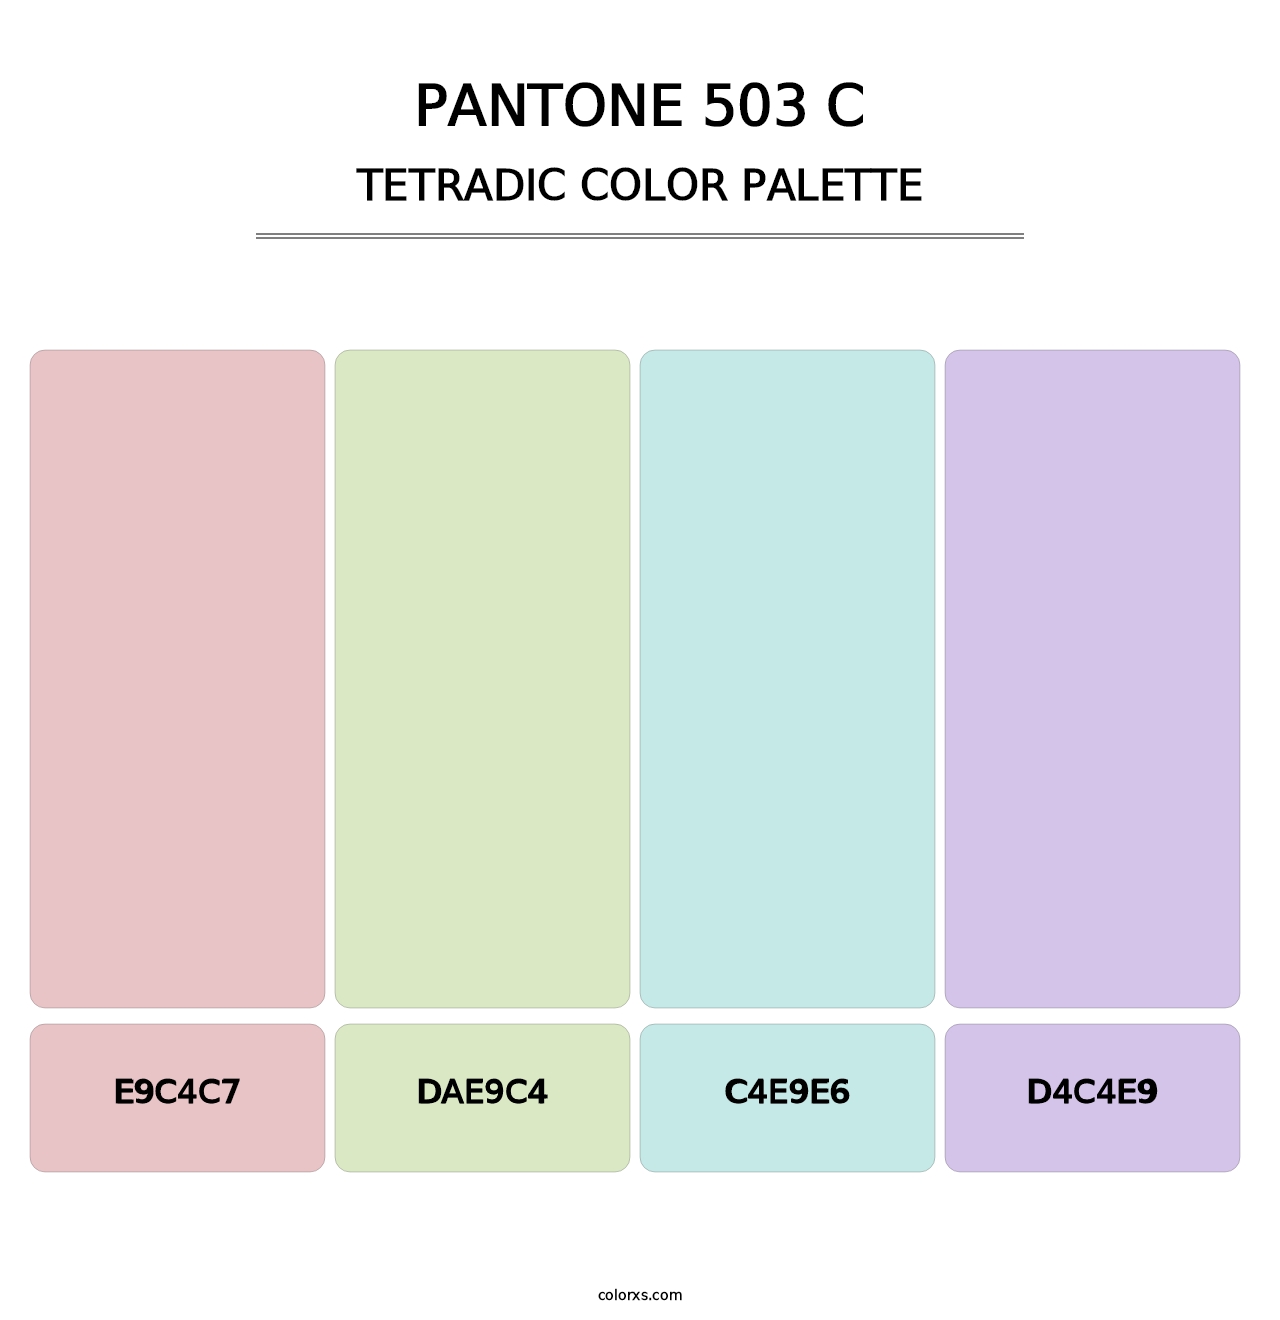 PANTONE 503 C - Tetradic Color Palette